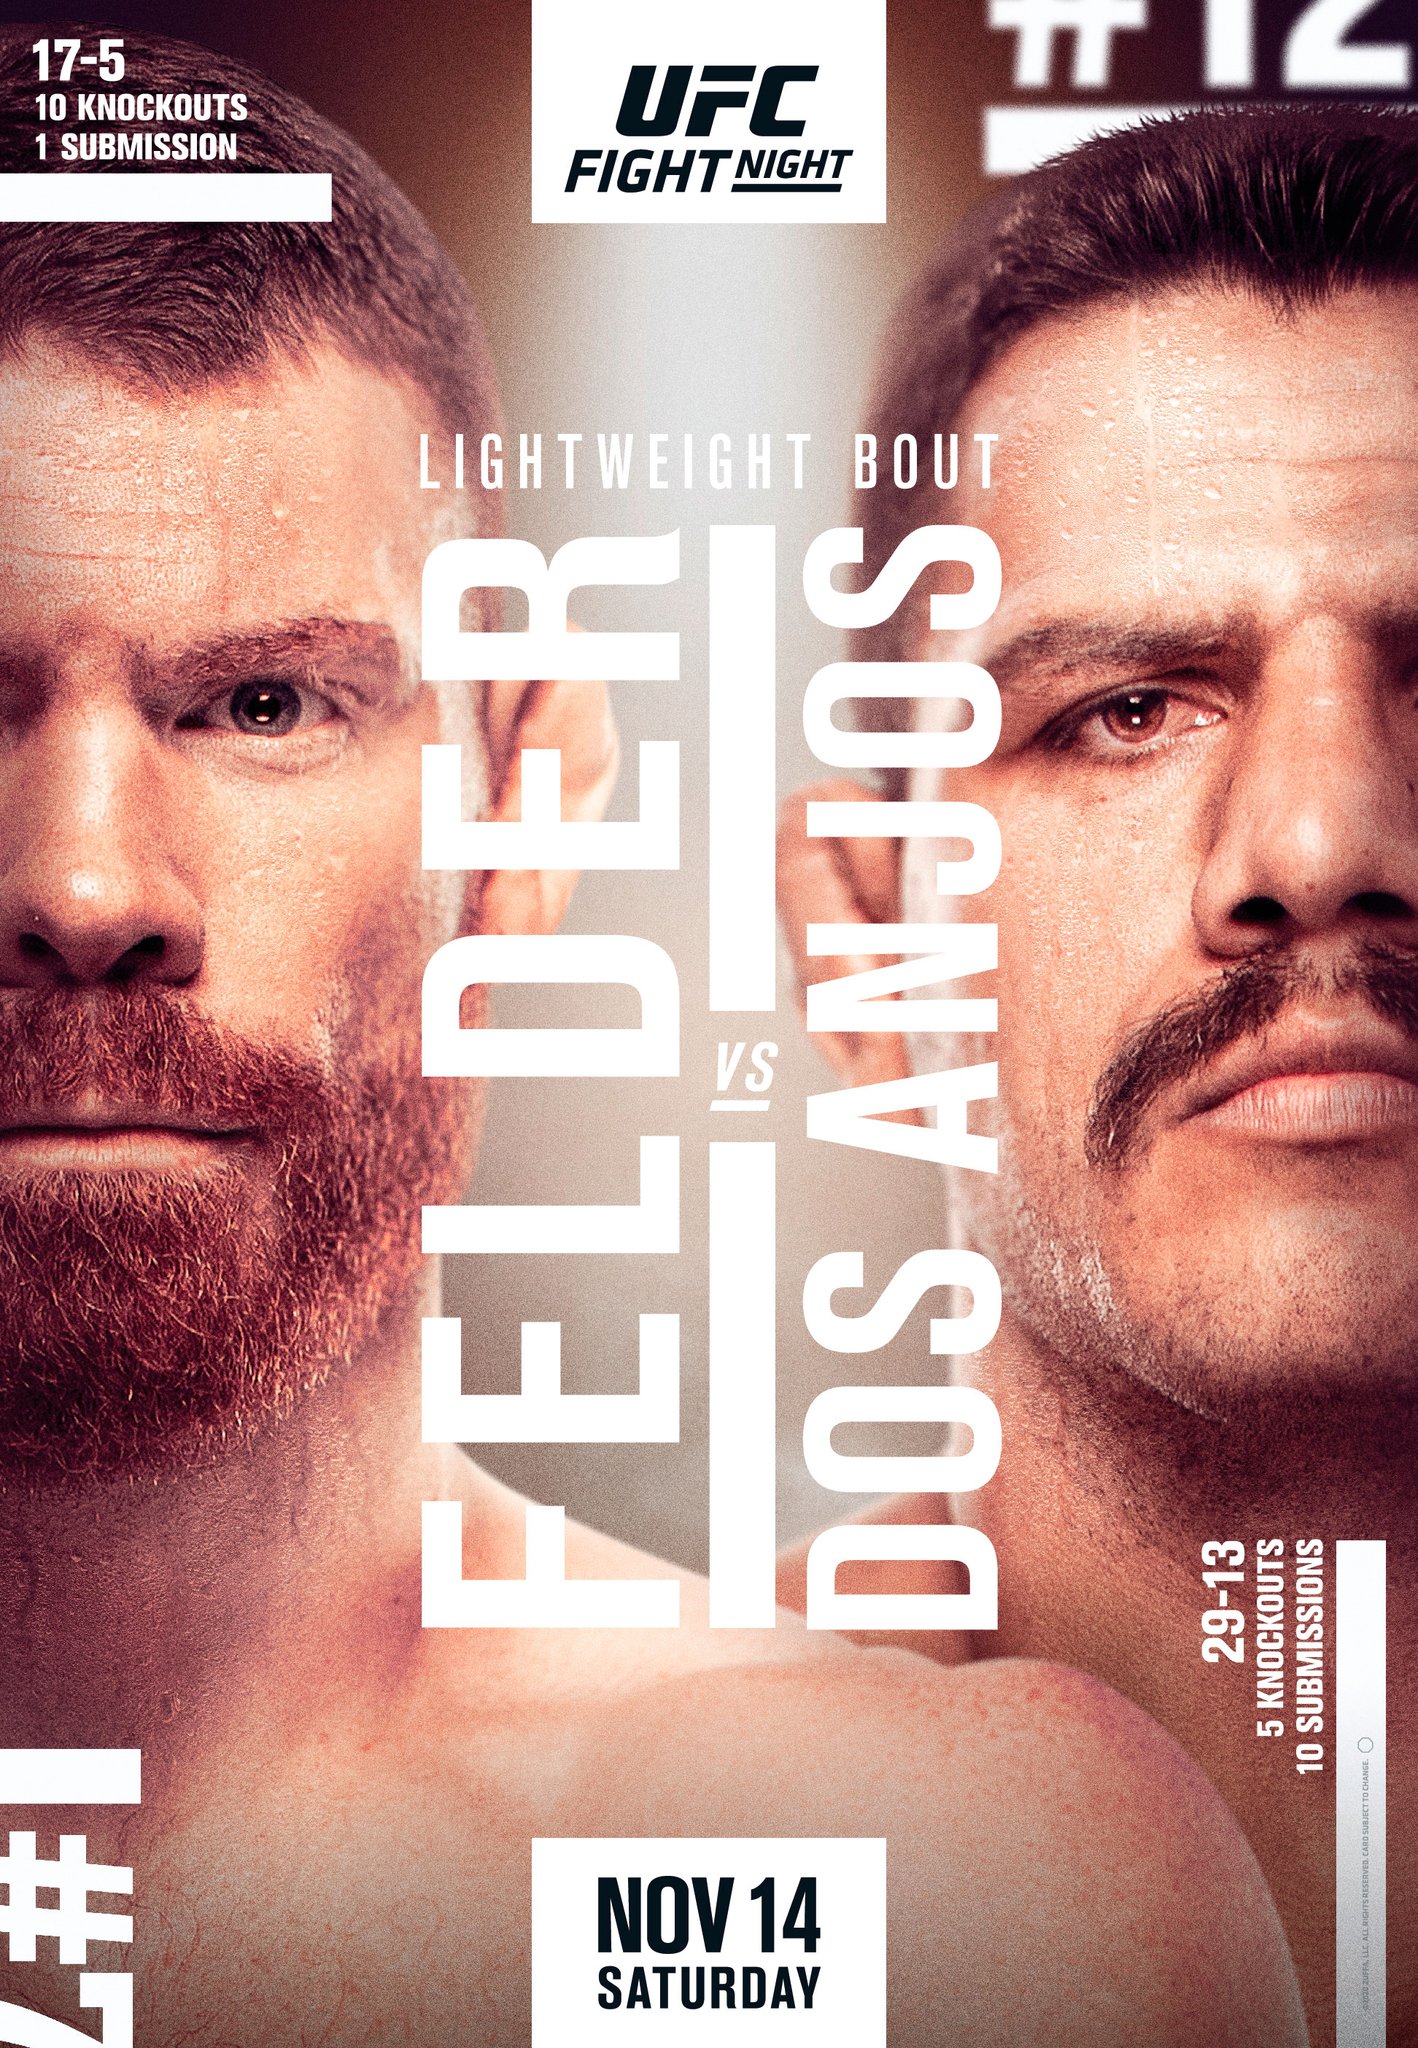 UFC on ESPN+ 40 - Poster et affiche